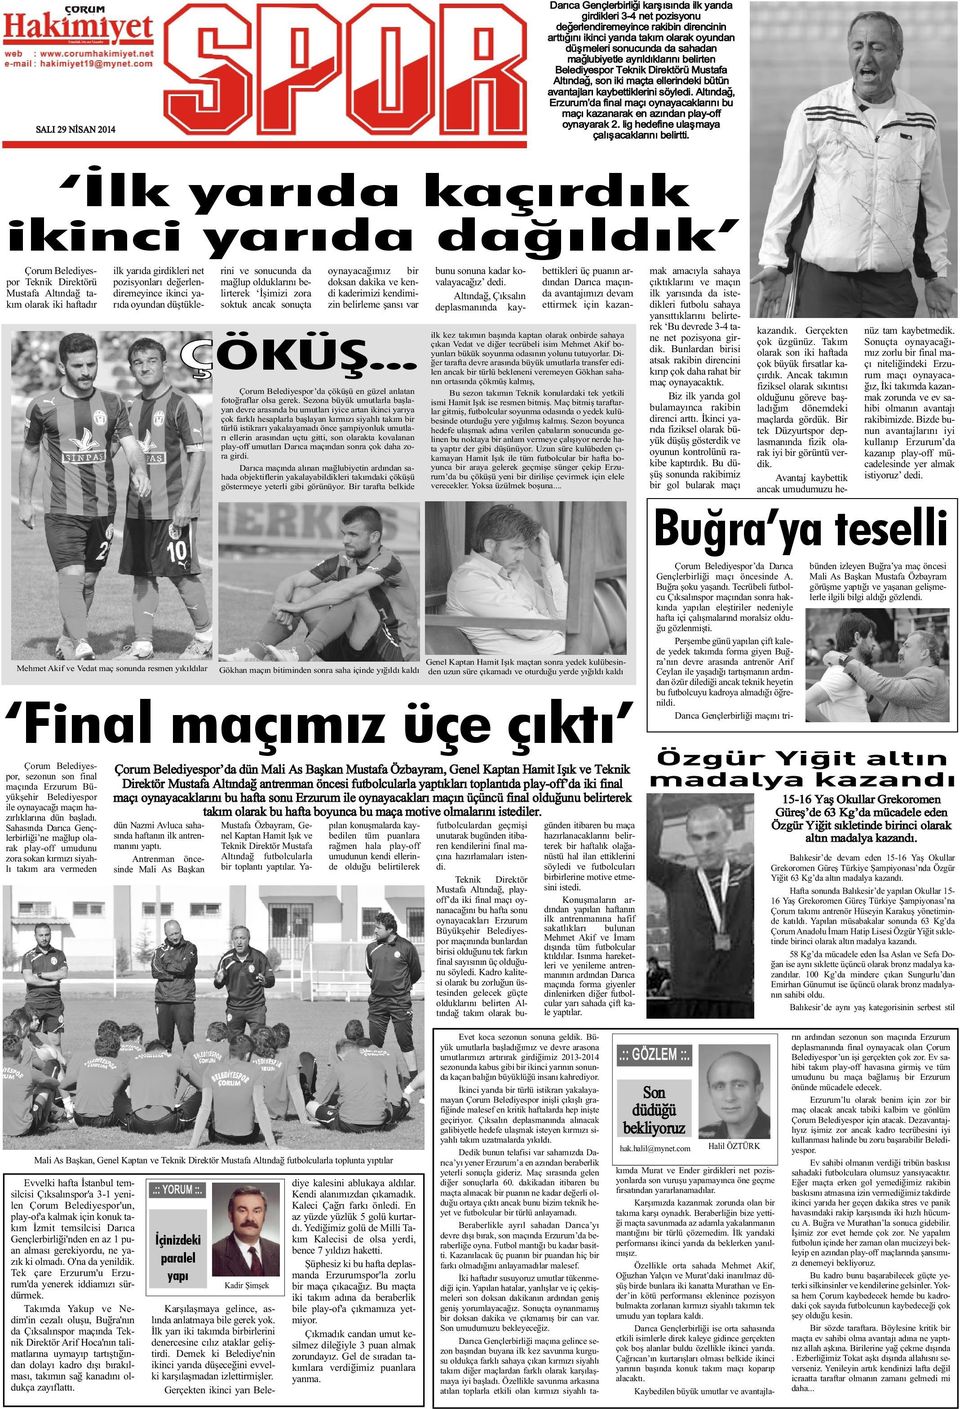 Altýndað, Erzurum da final maçý oynayacaklarýný bu maçý kazanarak en azýndan play-off oynayarak 2. lig hedefine ulaþmaya çalýþacaklarýný belirtti.